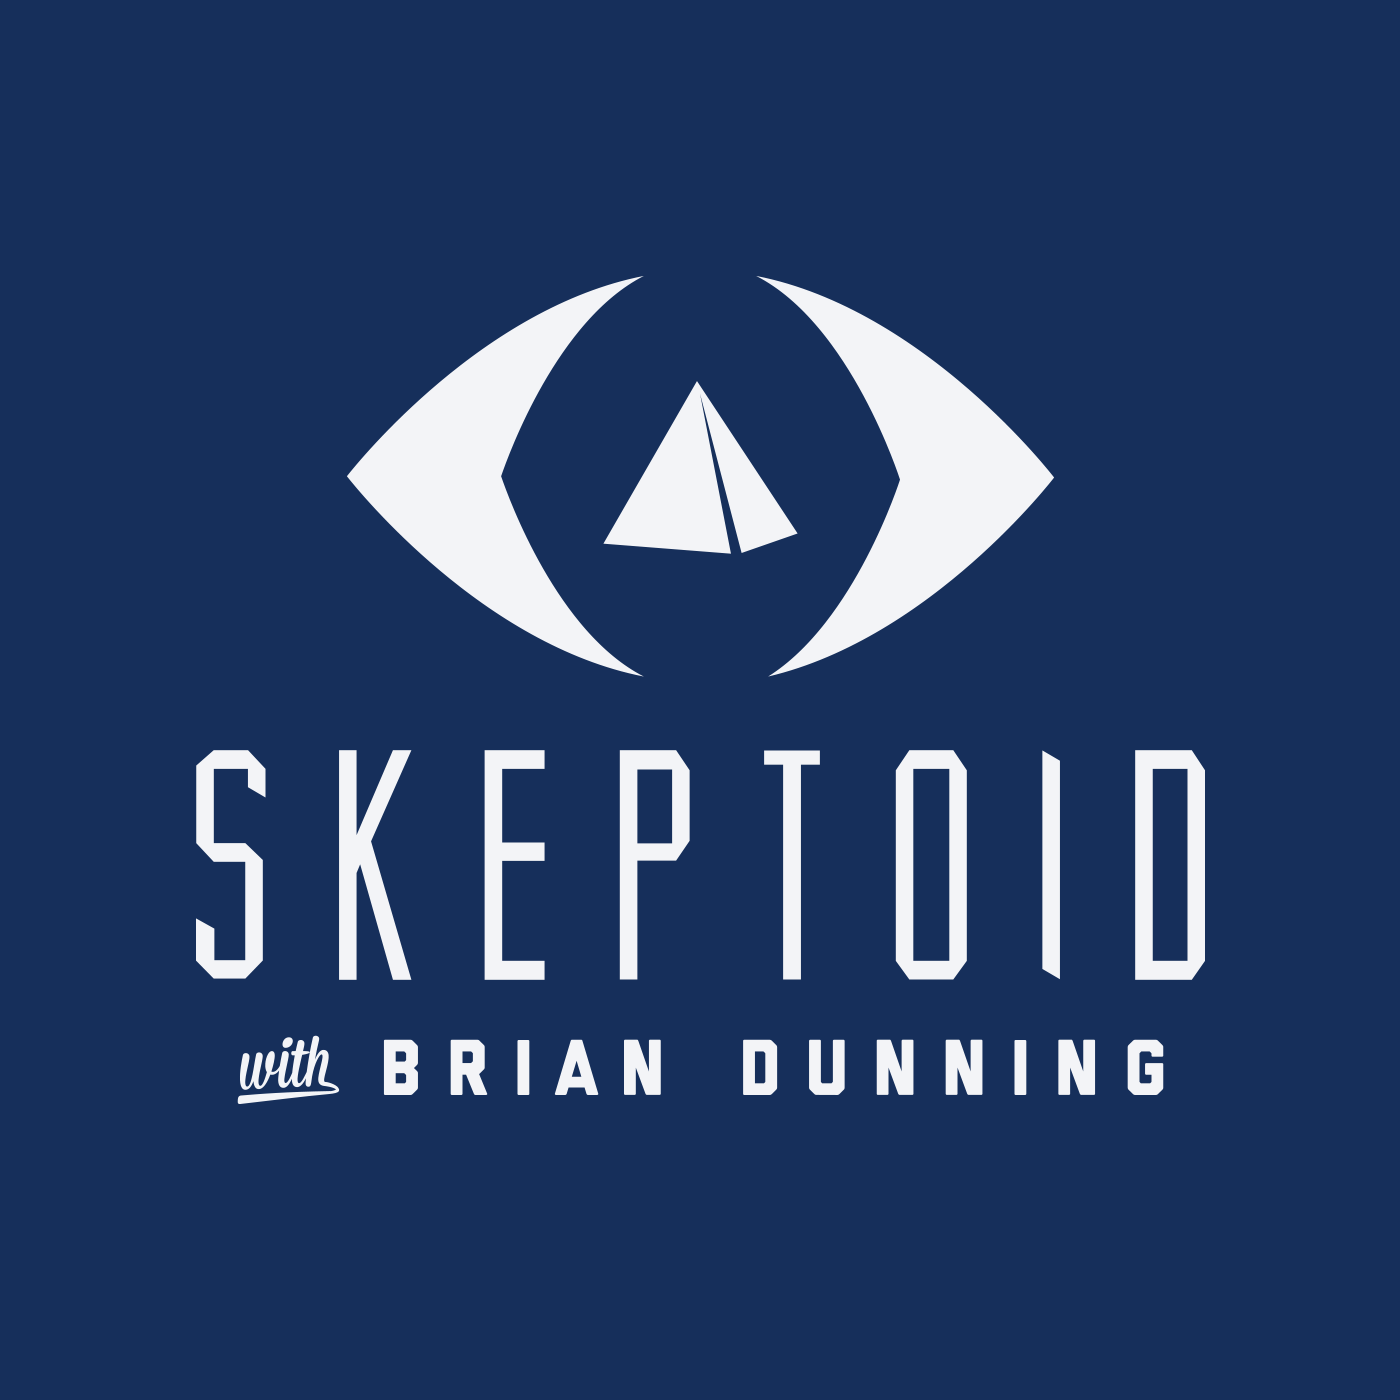 Reflecting on 5 Years of Skeptoid